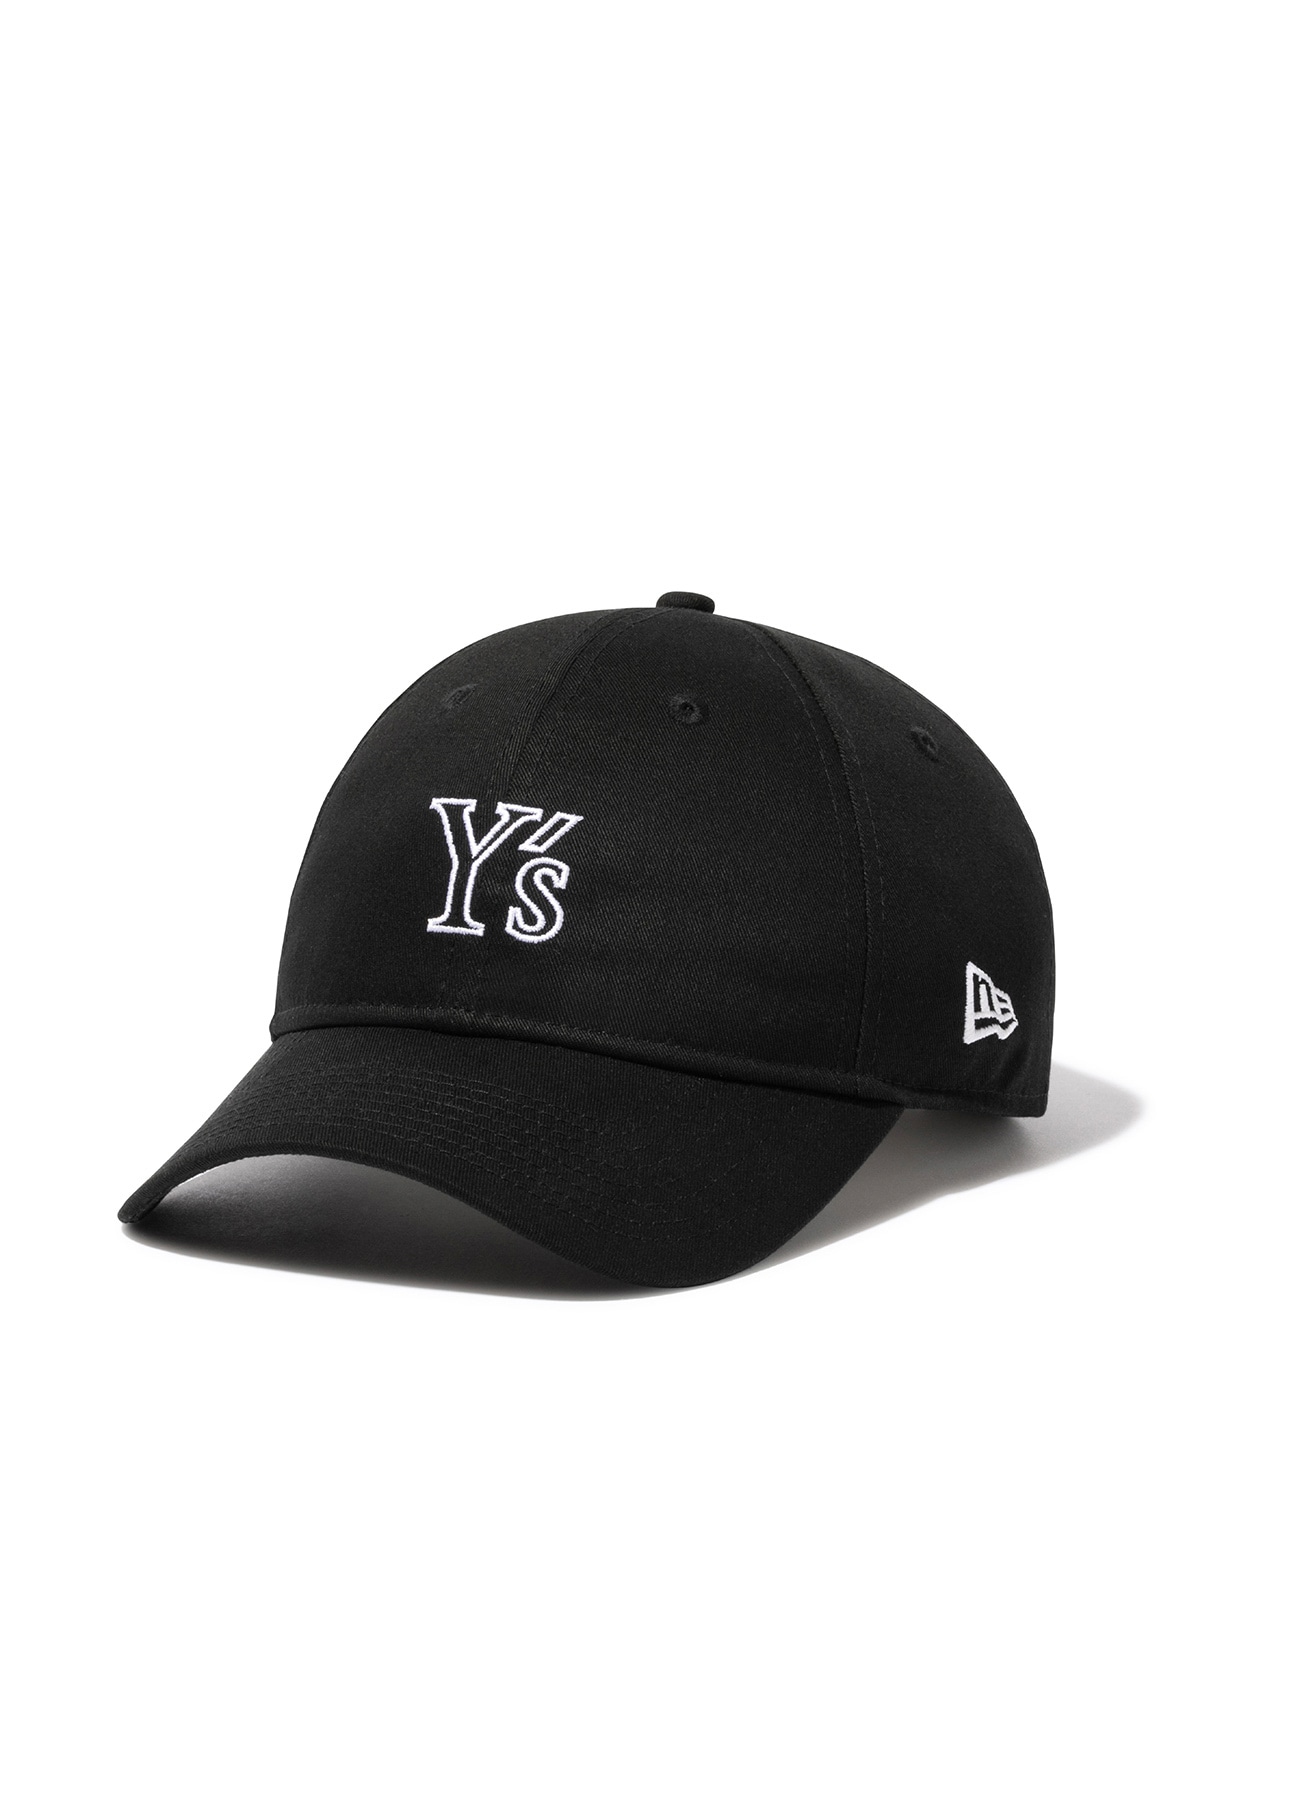 Y's × New Era] 9THIRTY Y's LOGO CAP(FREE SIZE Black): Y's｜THE 